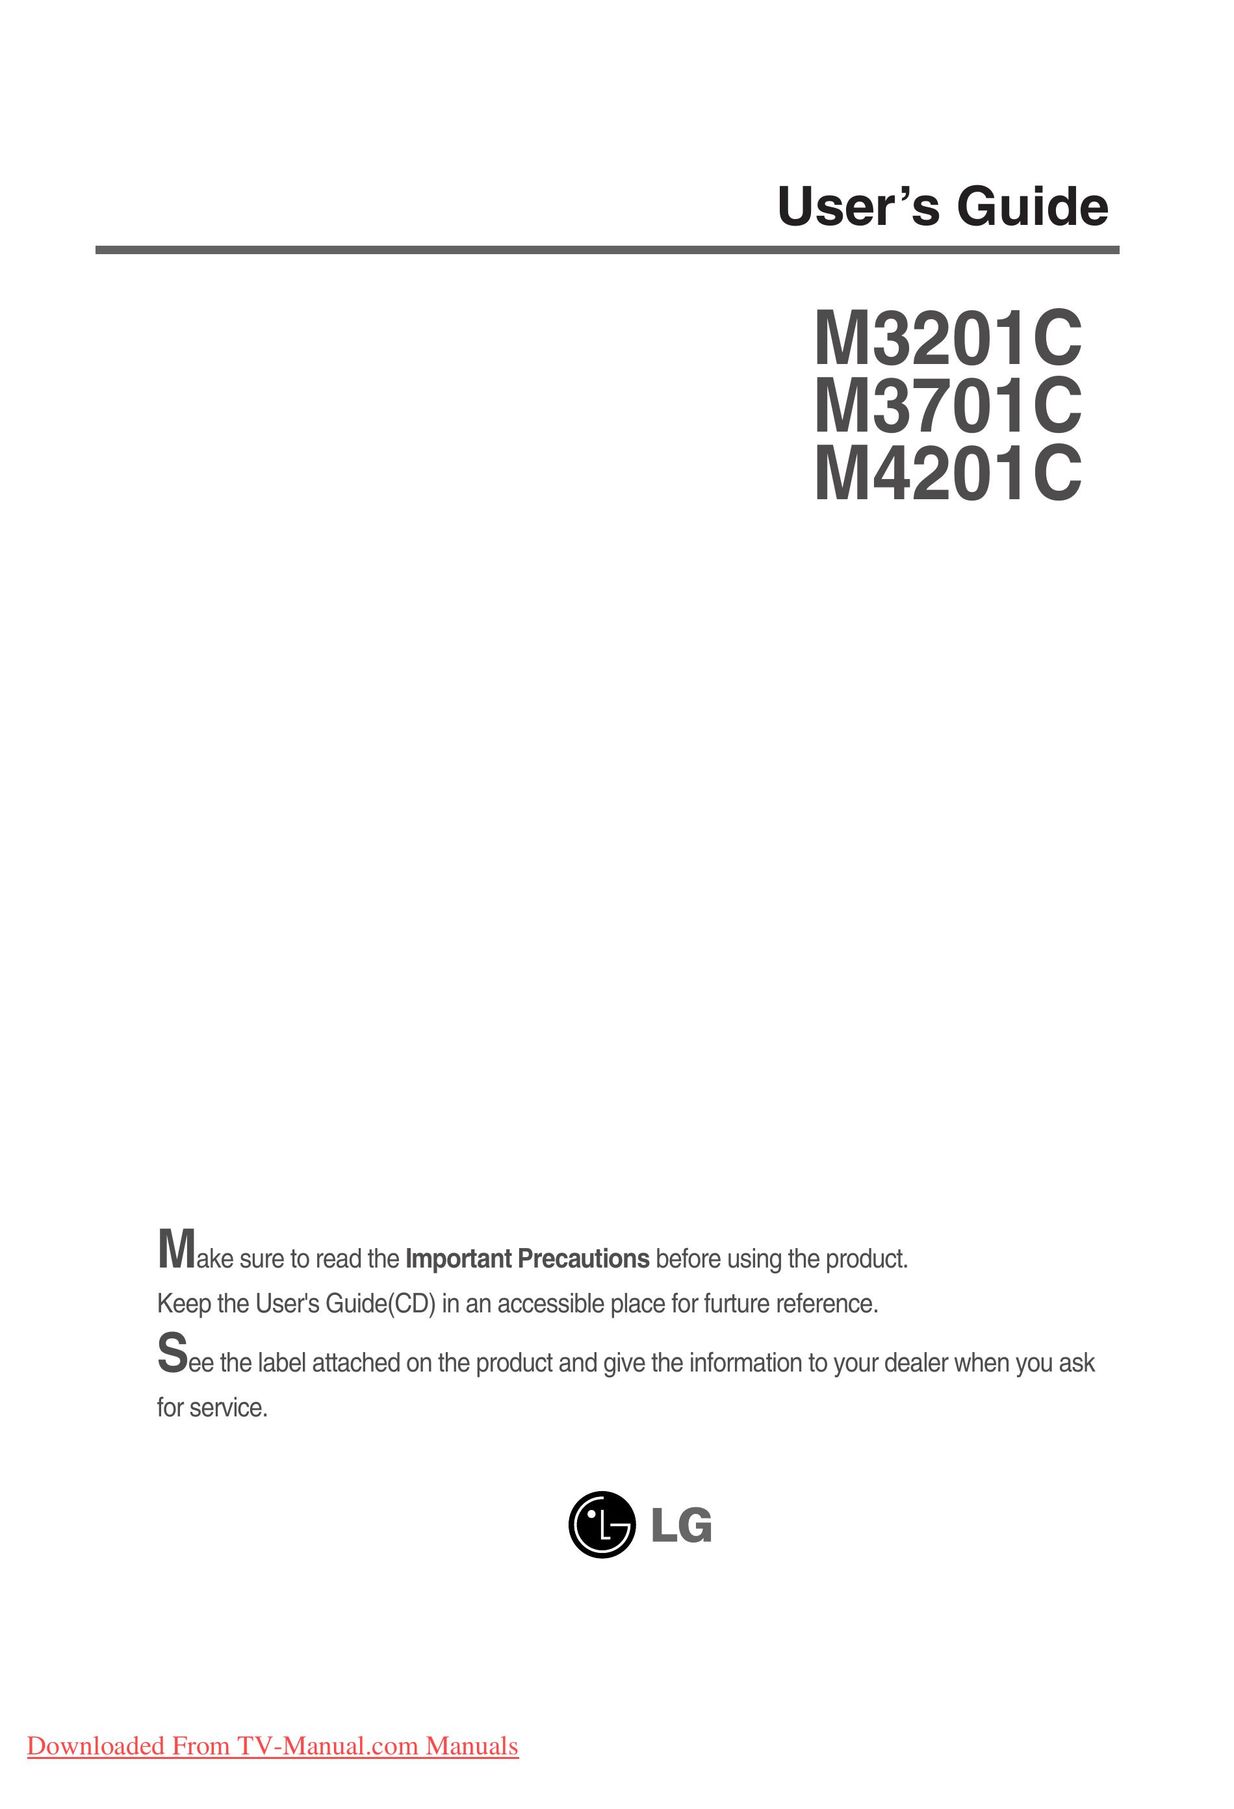 LG Electronics M4201C Model Vehicle User Manual (Page 1)